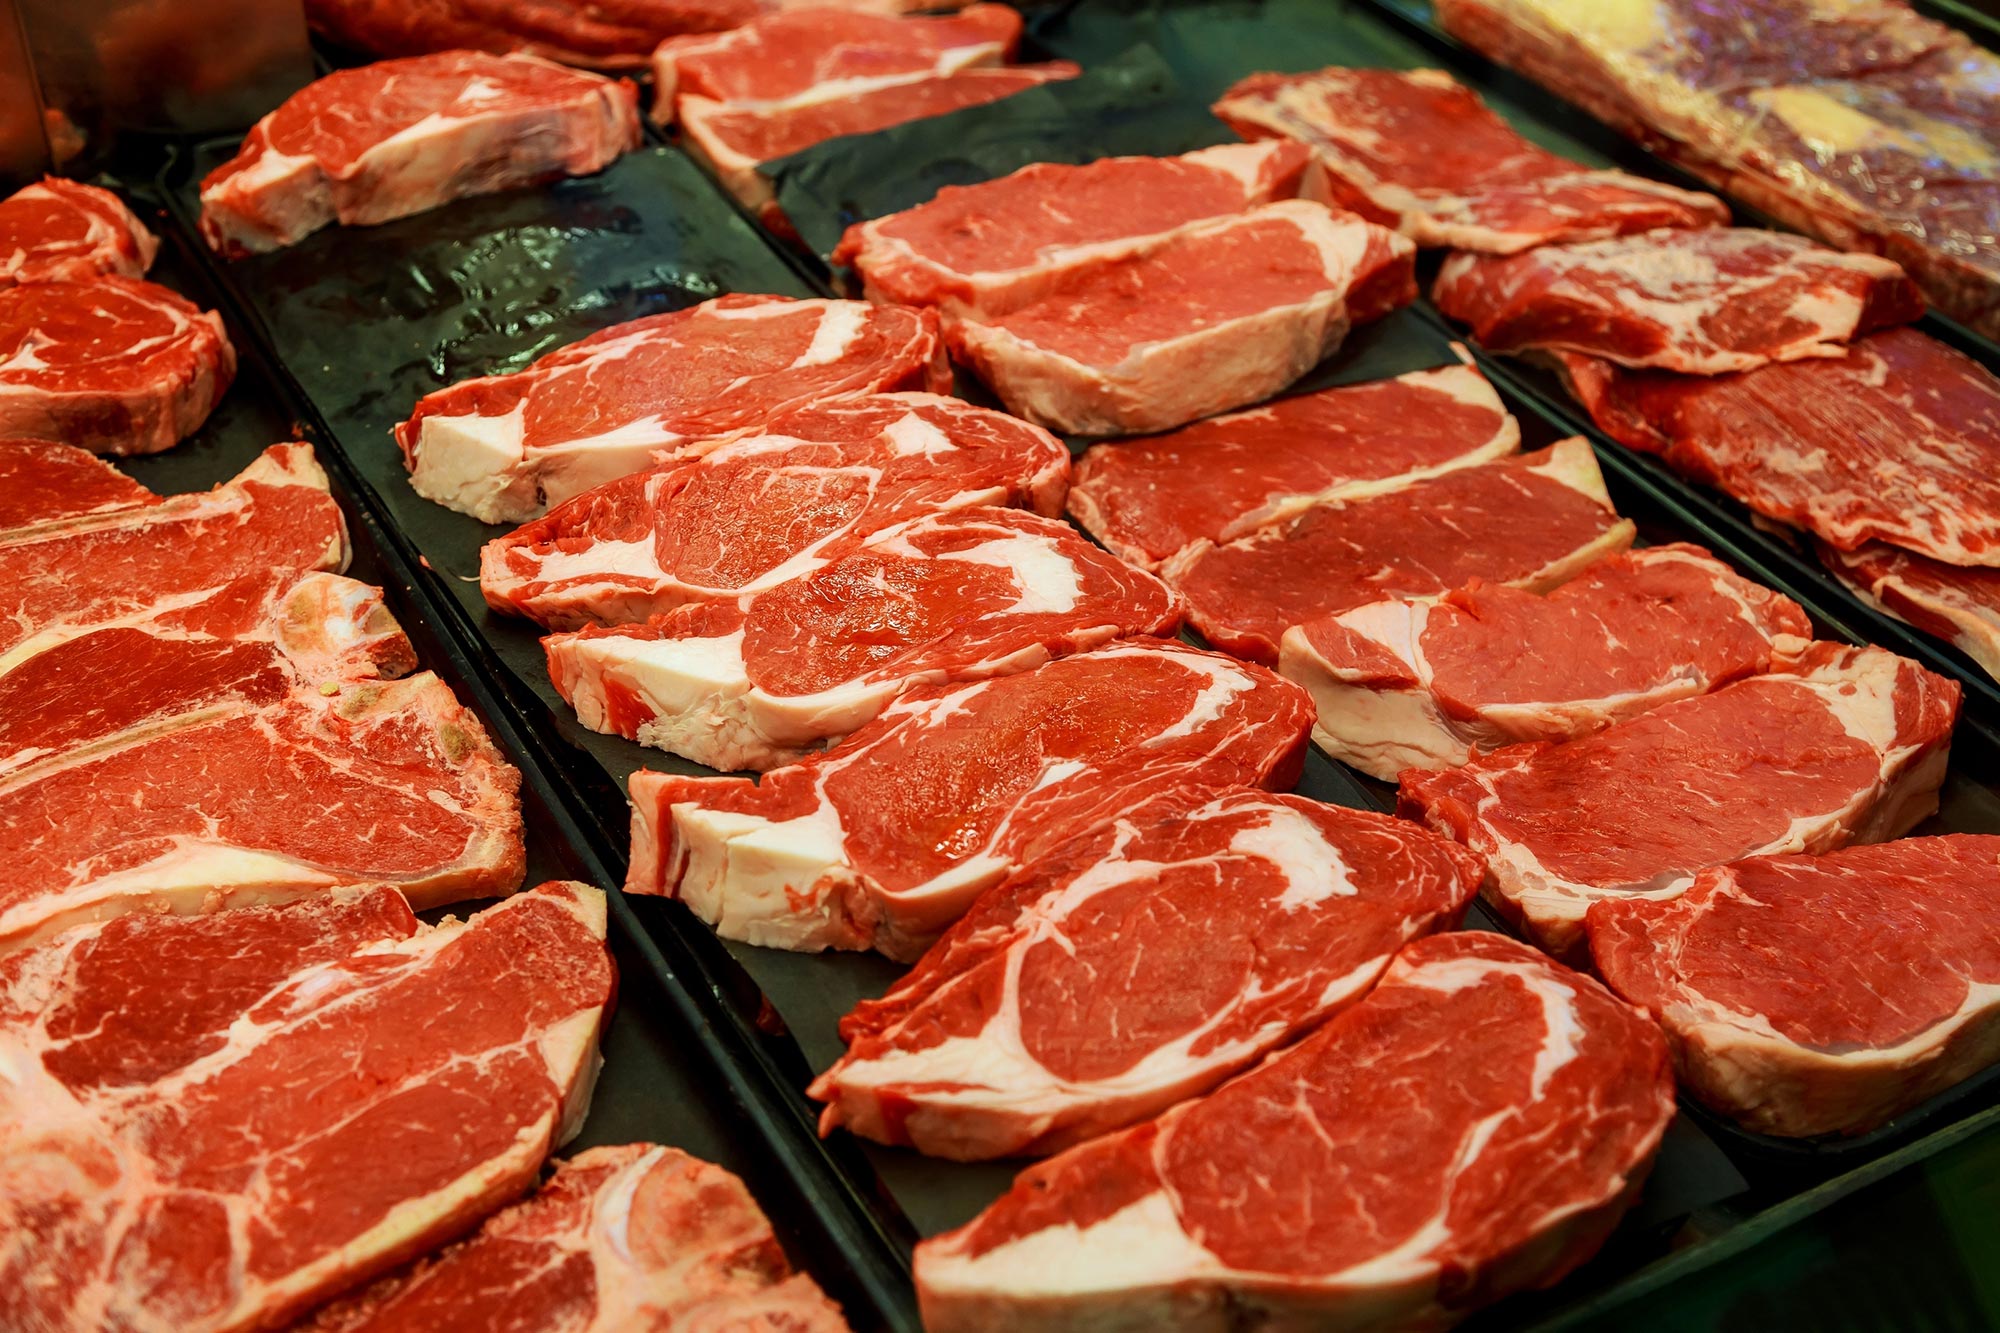 Superbugs found in three quarters of U.S. supermarket meat